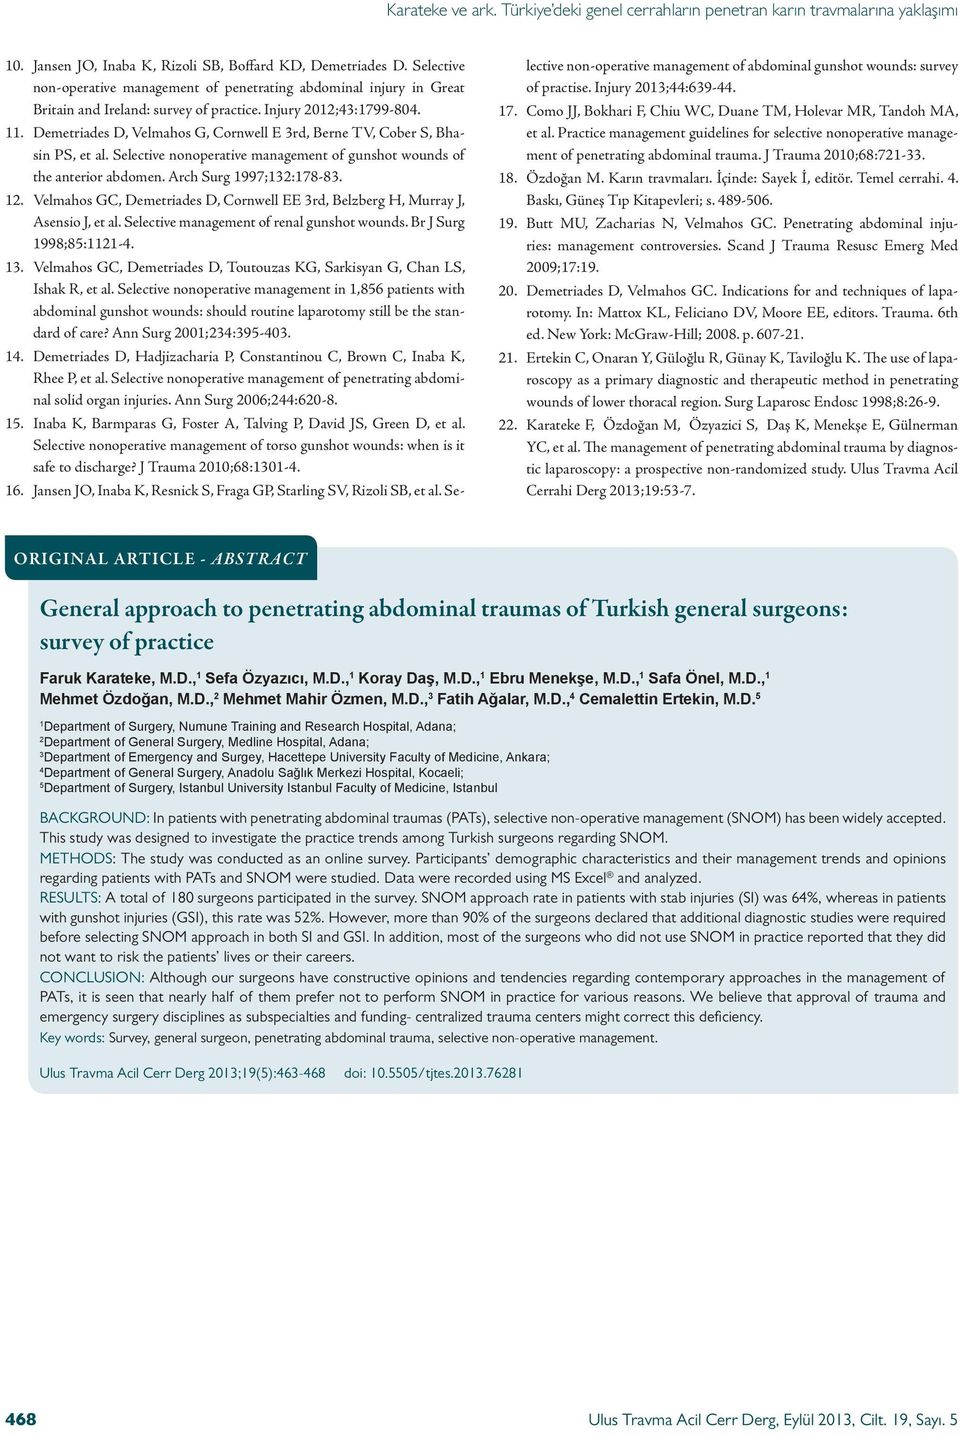 Velmahos GC, Demetriades D, Cornwell EE 3rd, Belzberg H, Murray J, Asensio J, et al. Selective management of renal gunshot wounds. Br J Surg 1998;85:1121-4. 13.